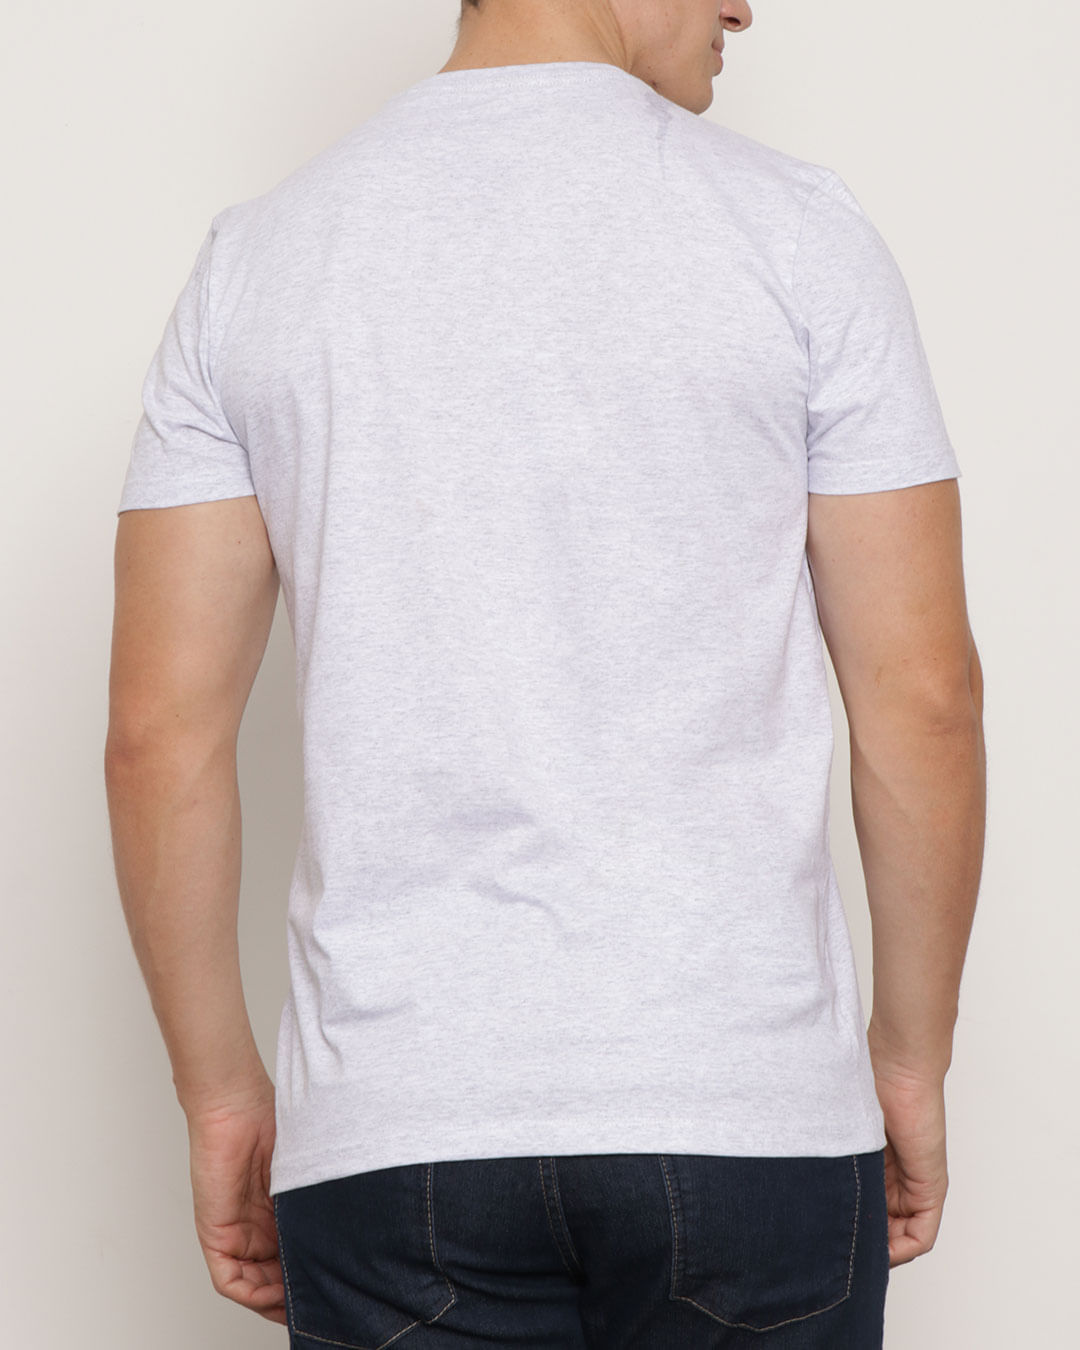 Camiseta-Masculina-Manga-Curta-Estampa-Bussola-Branco-